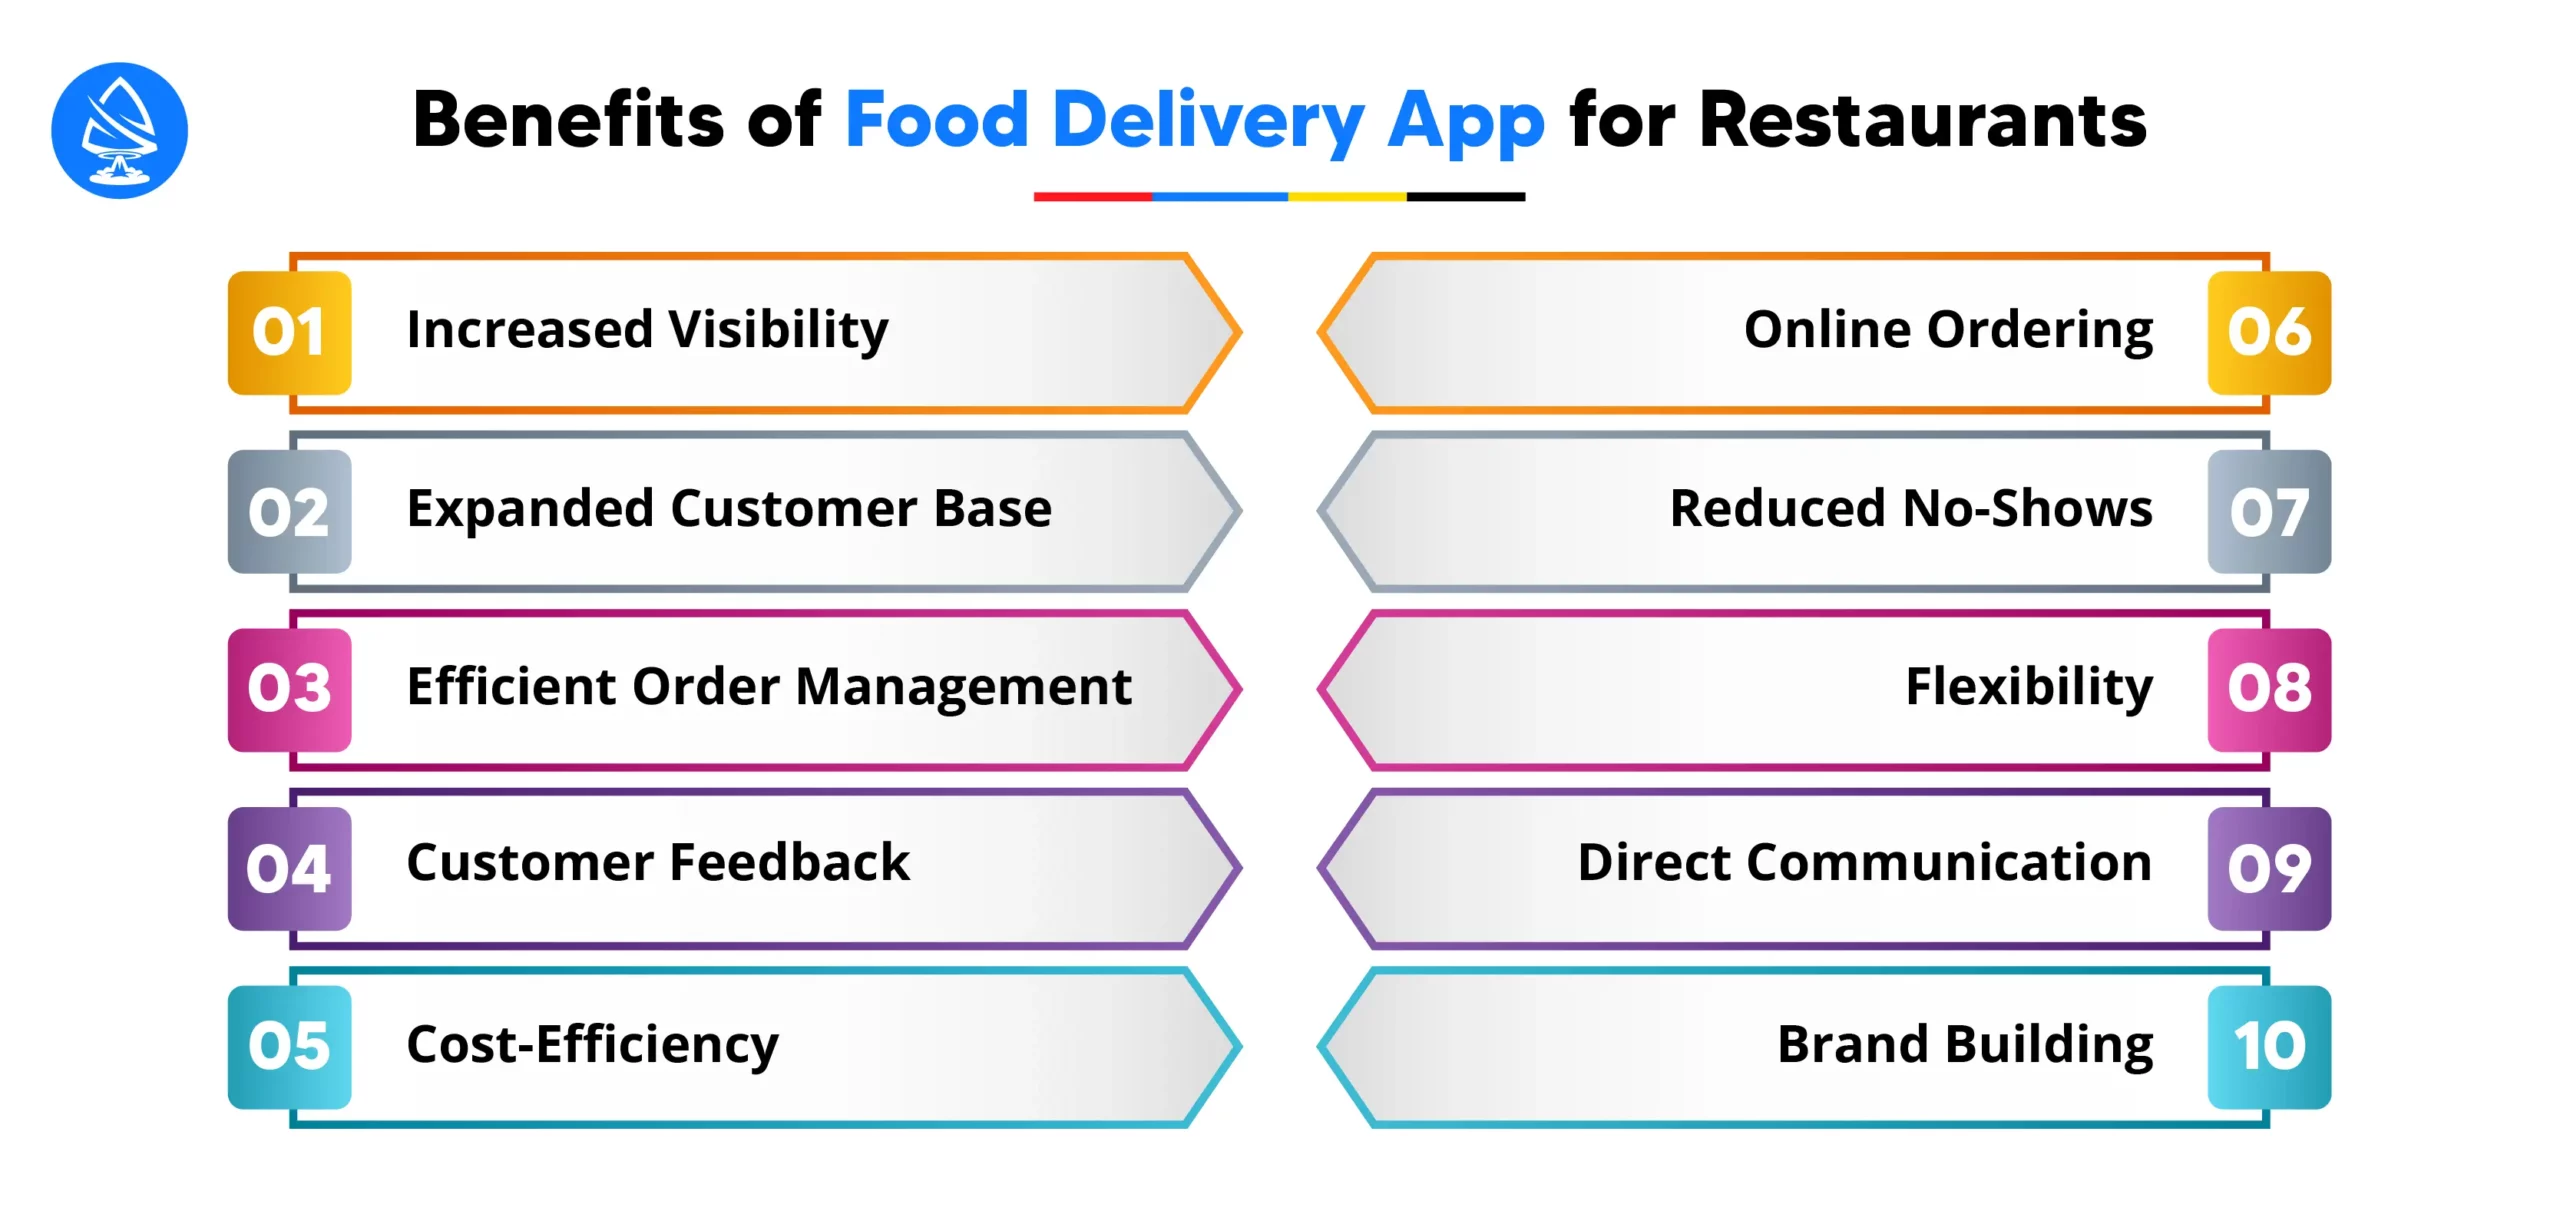 Benefits of Food Delivery App for Restaurants